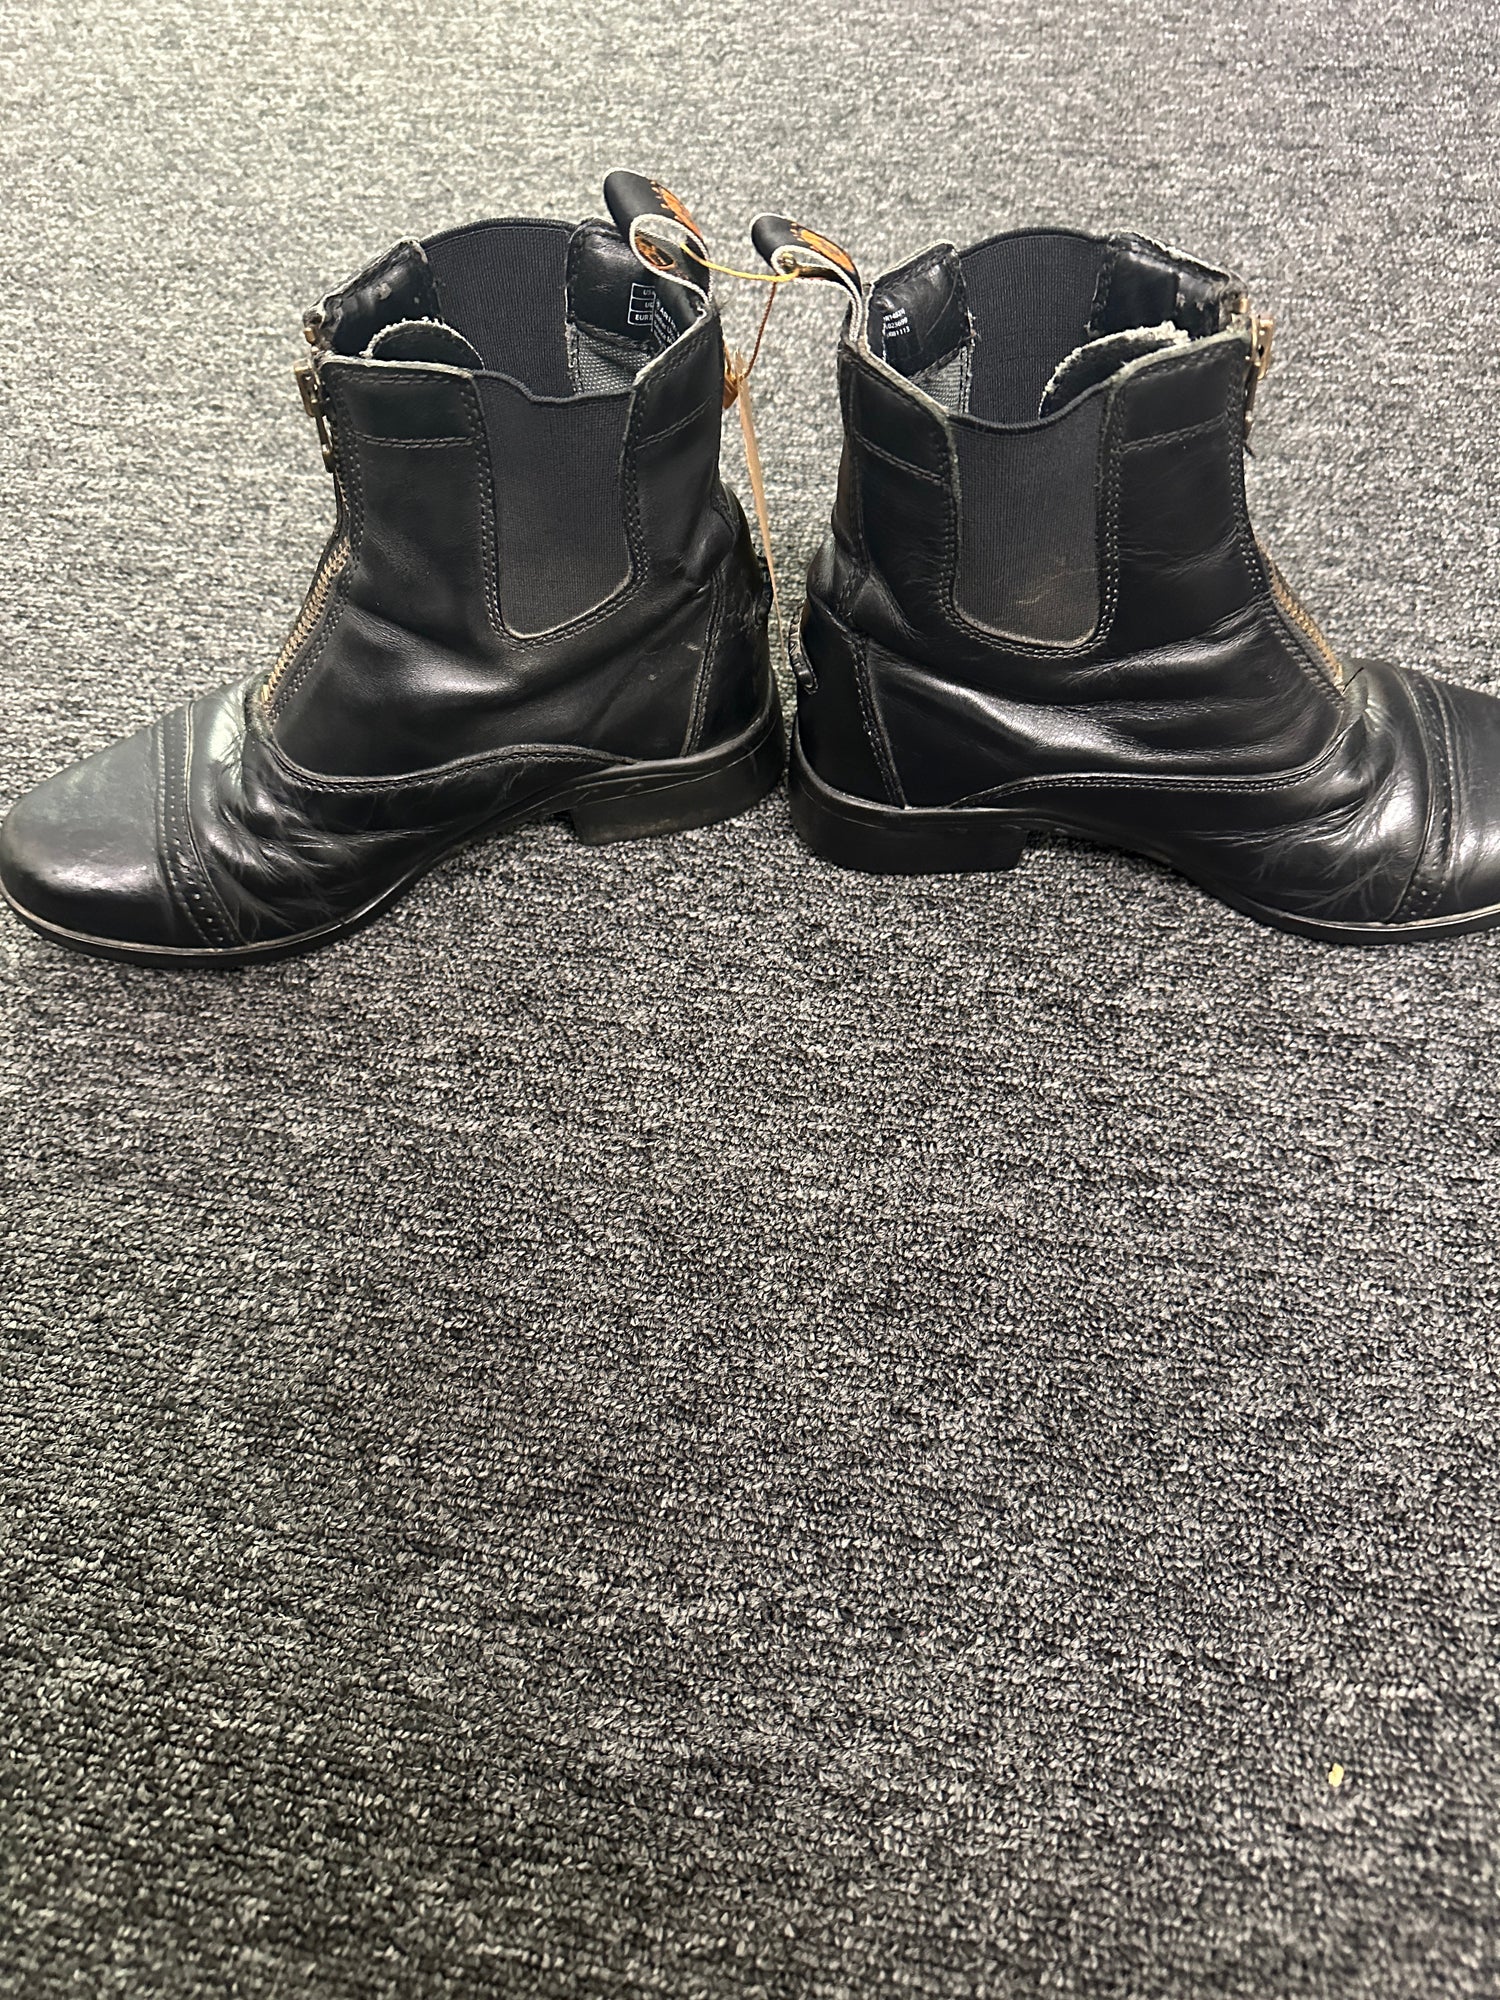 Women's Paddock Boots Size 6.5